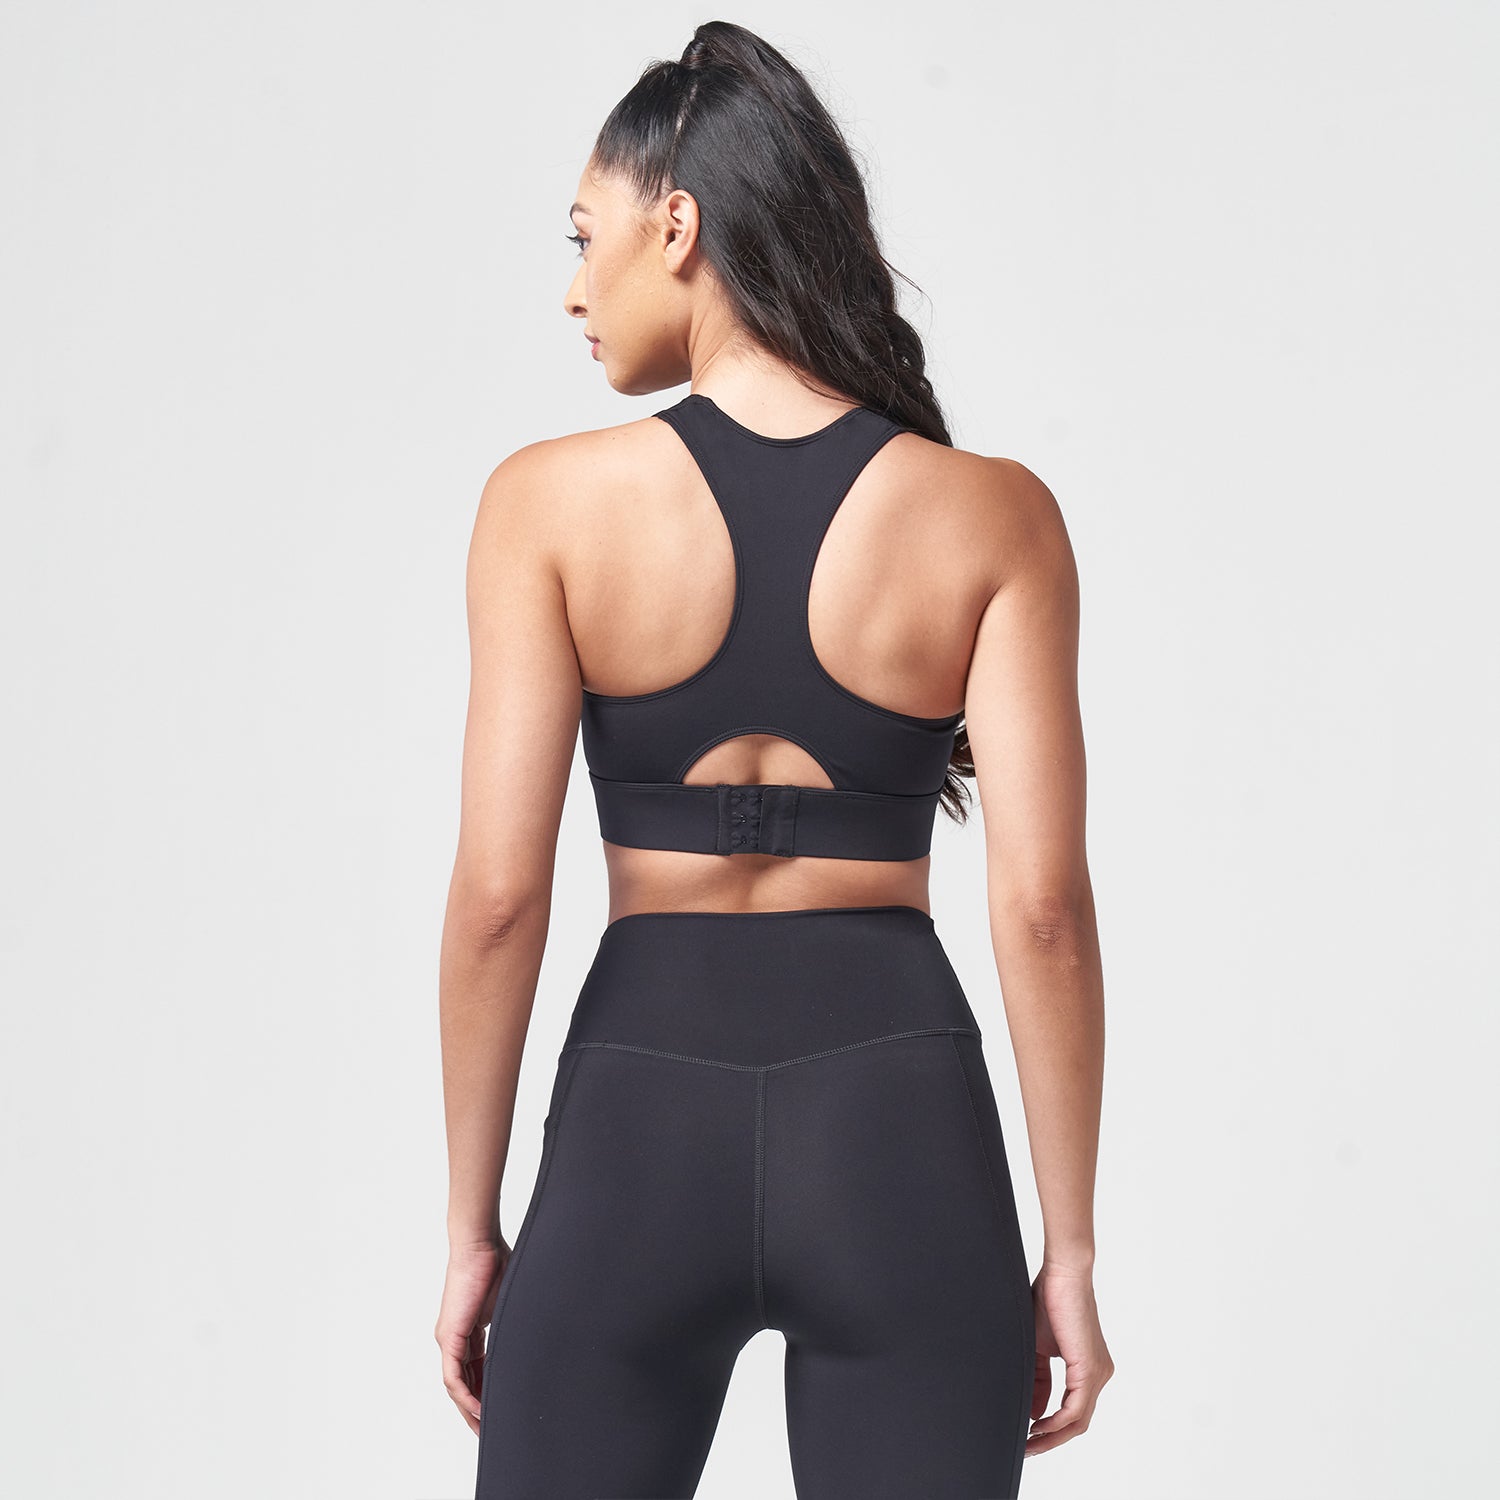 squatwolf-gym-wear-essential-high-impact-bra-black-workout-bra-for-women